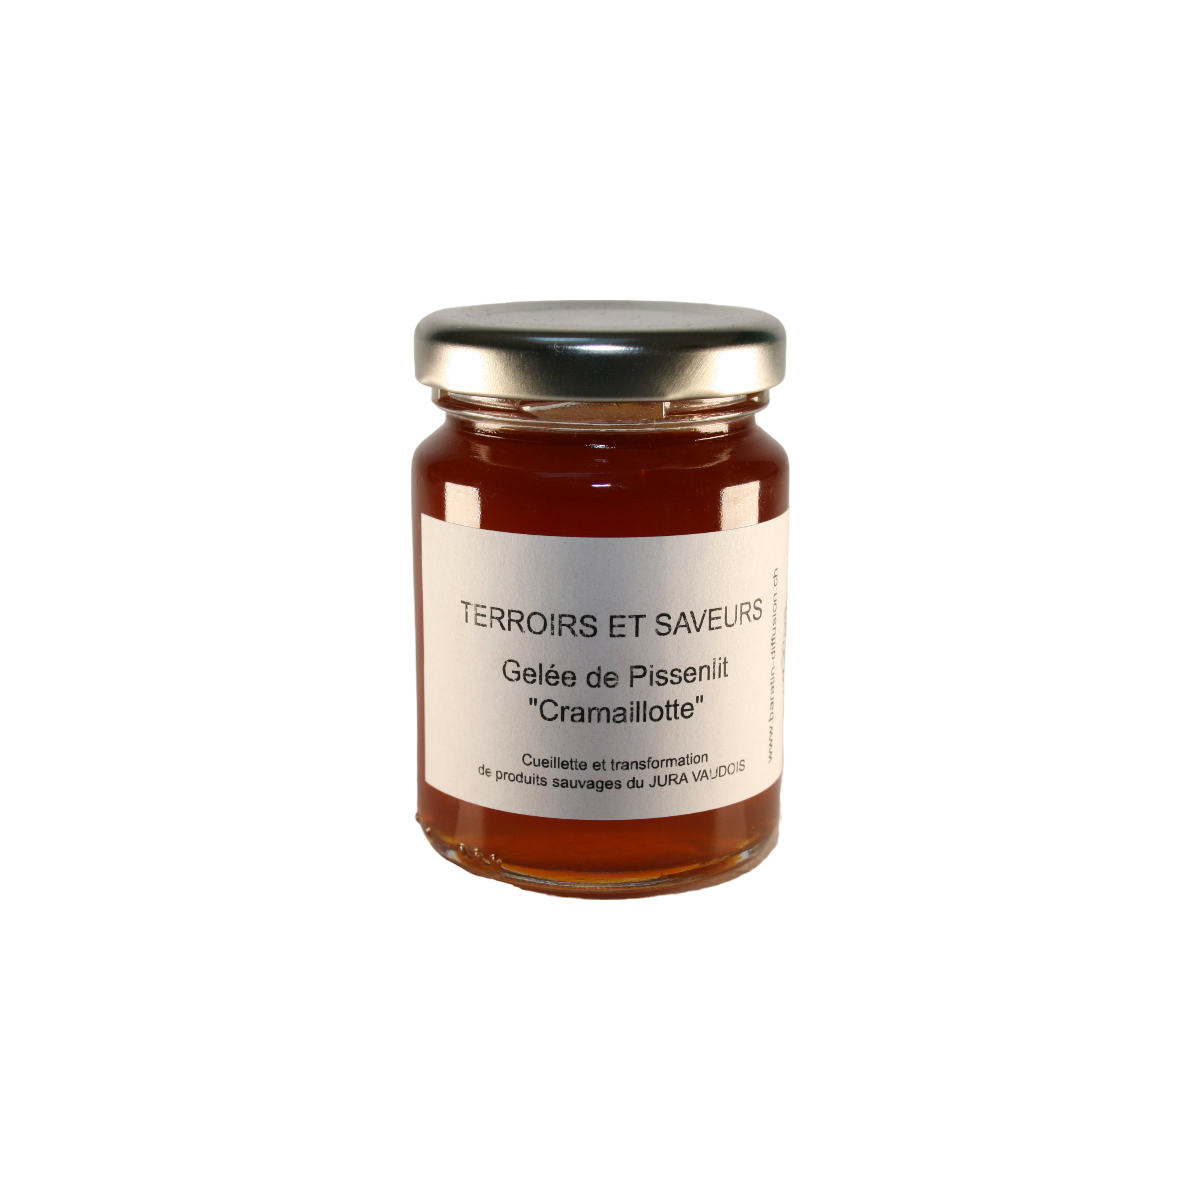 Wild "Cramaillotte" dandelion jelly from the Jura Vaudois